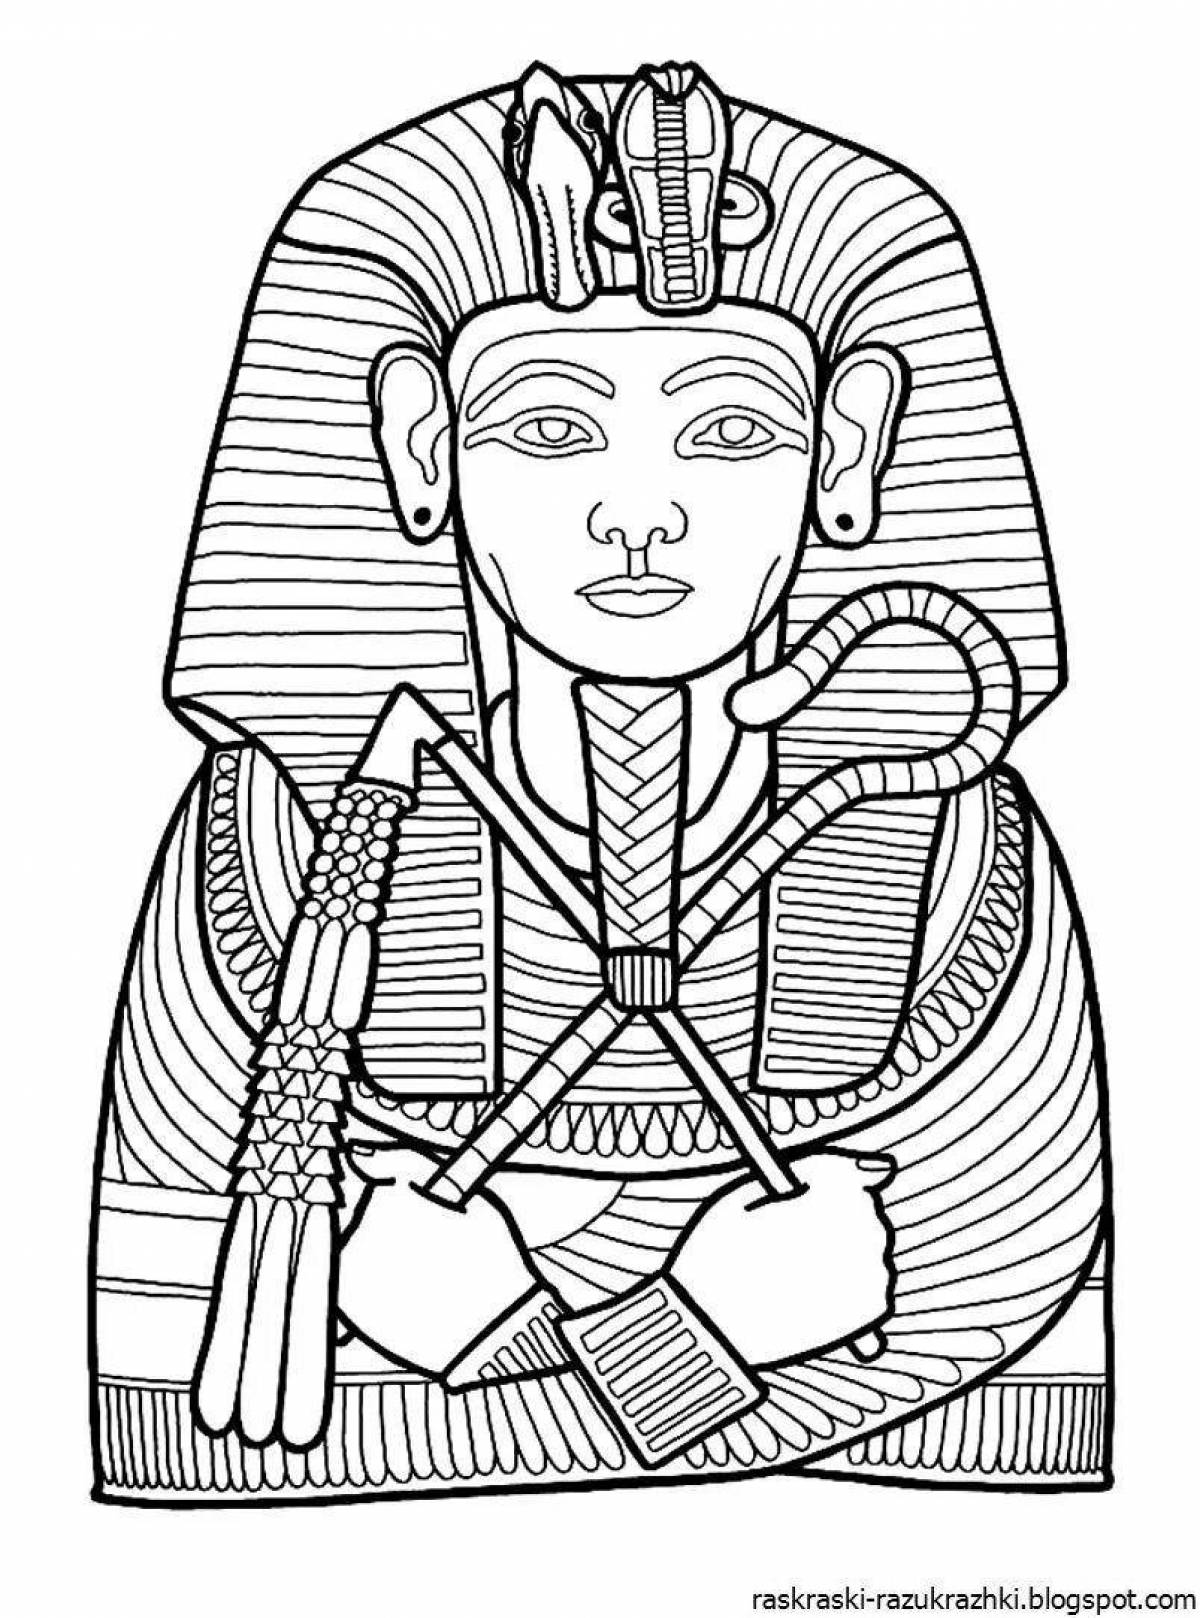 Pharaoh of ancient Egypt #8